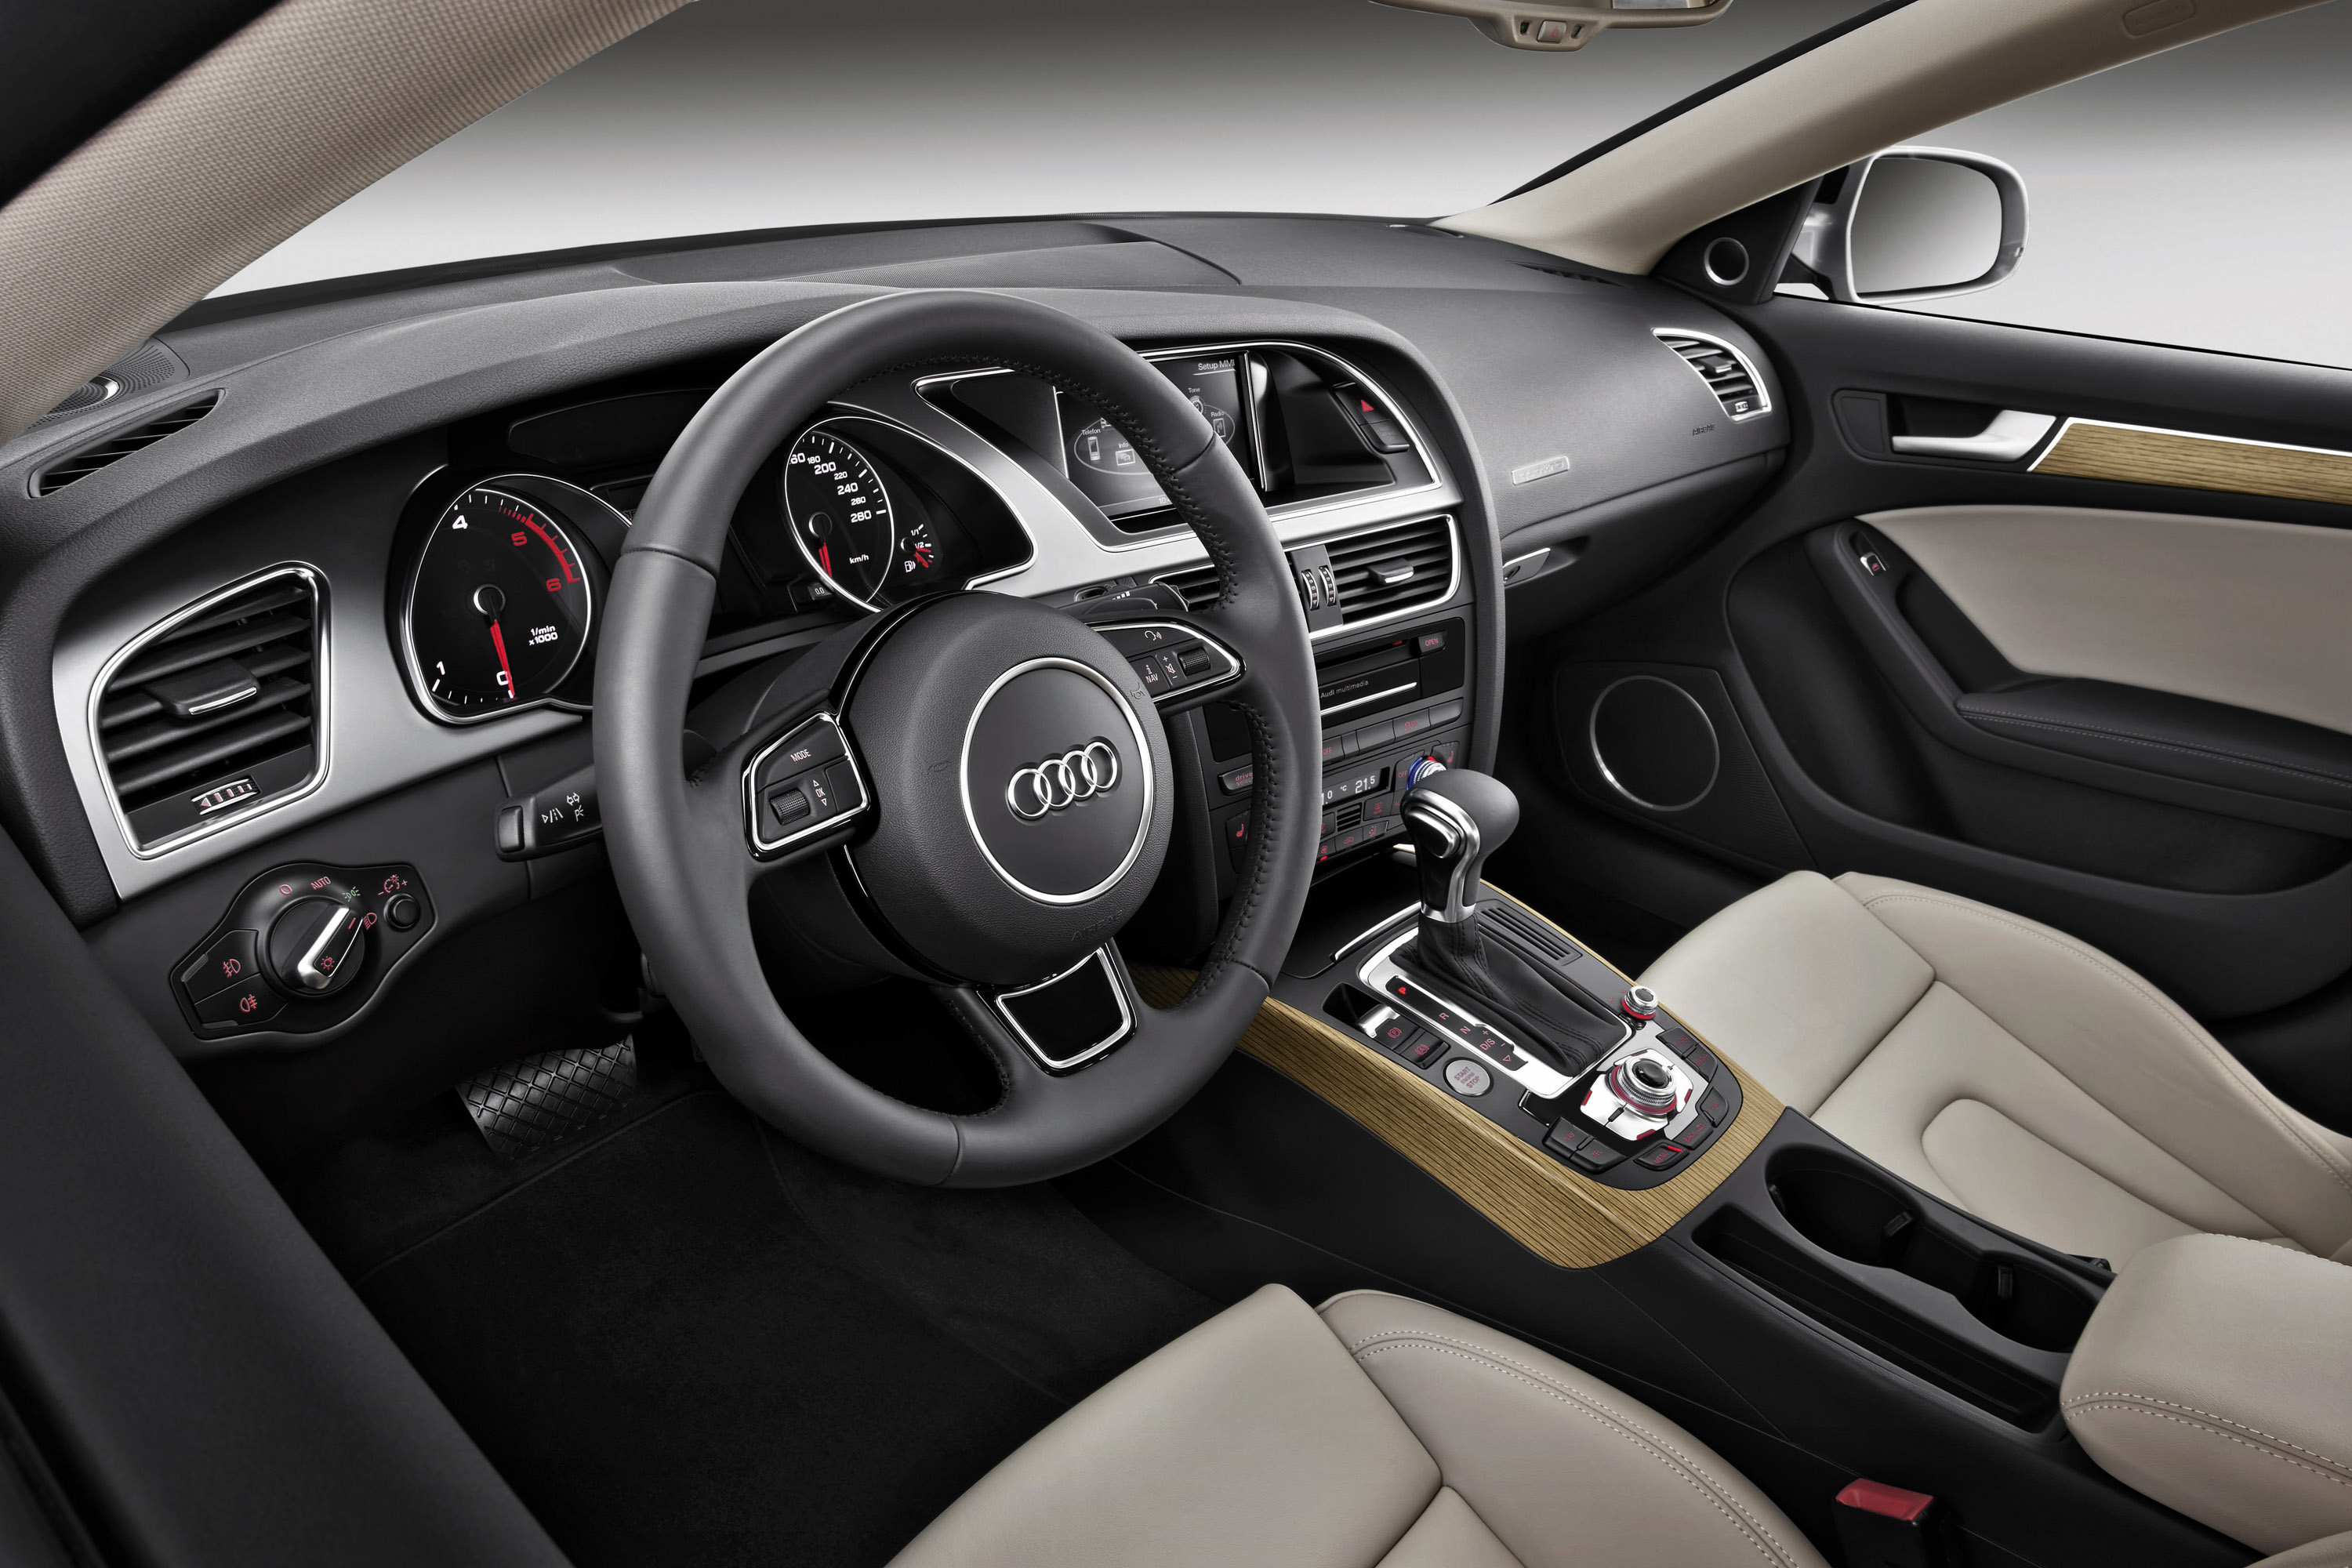 Ауди г 5. Audi a5 Sportback салон. Audi a5 Interior. Audi a5 Interior 2012. Audi a5 Sportback 2012 салон.